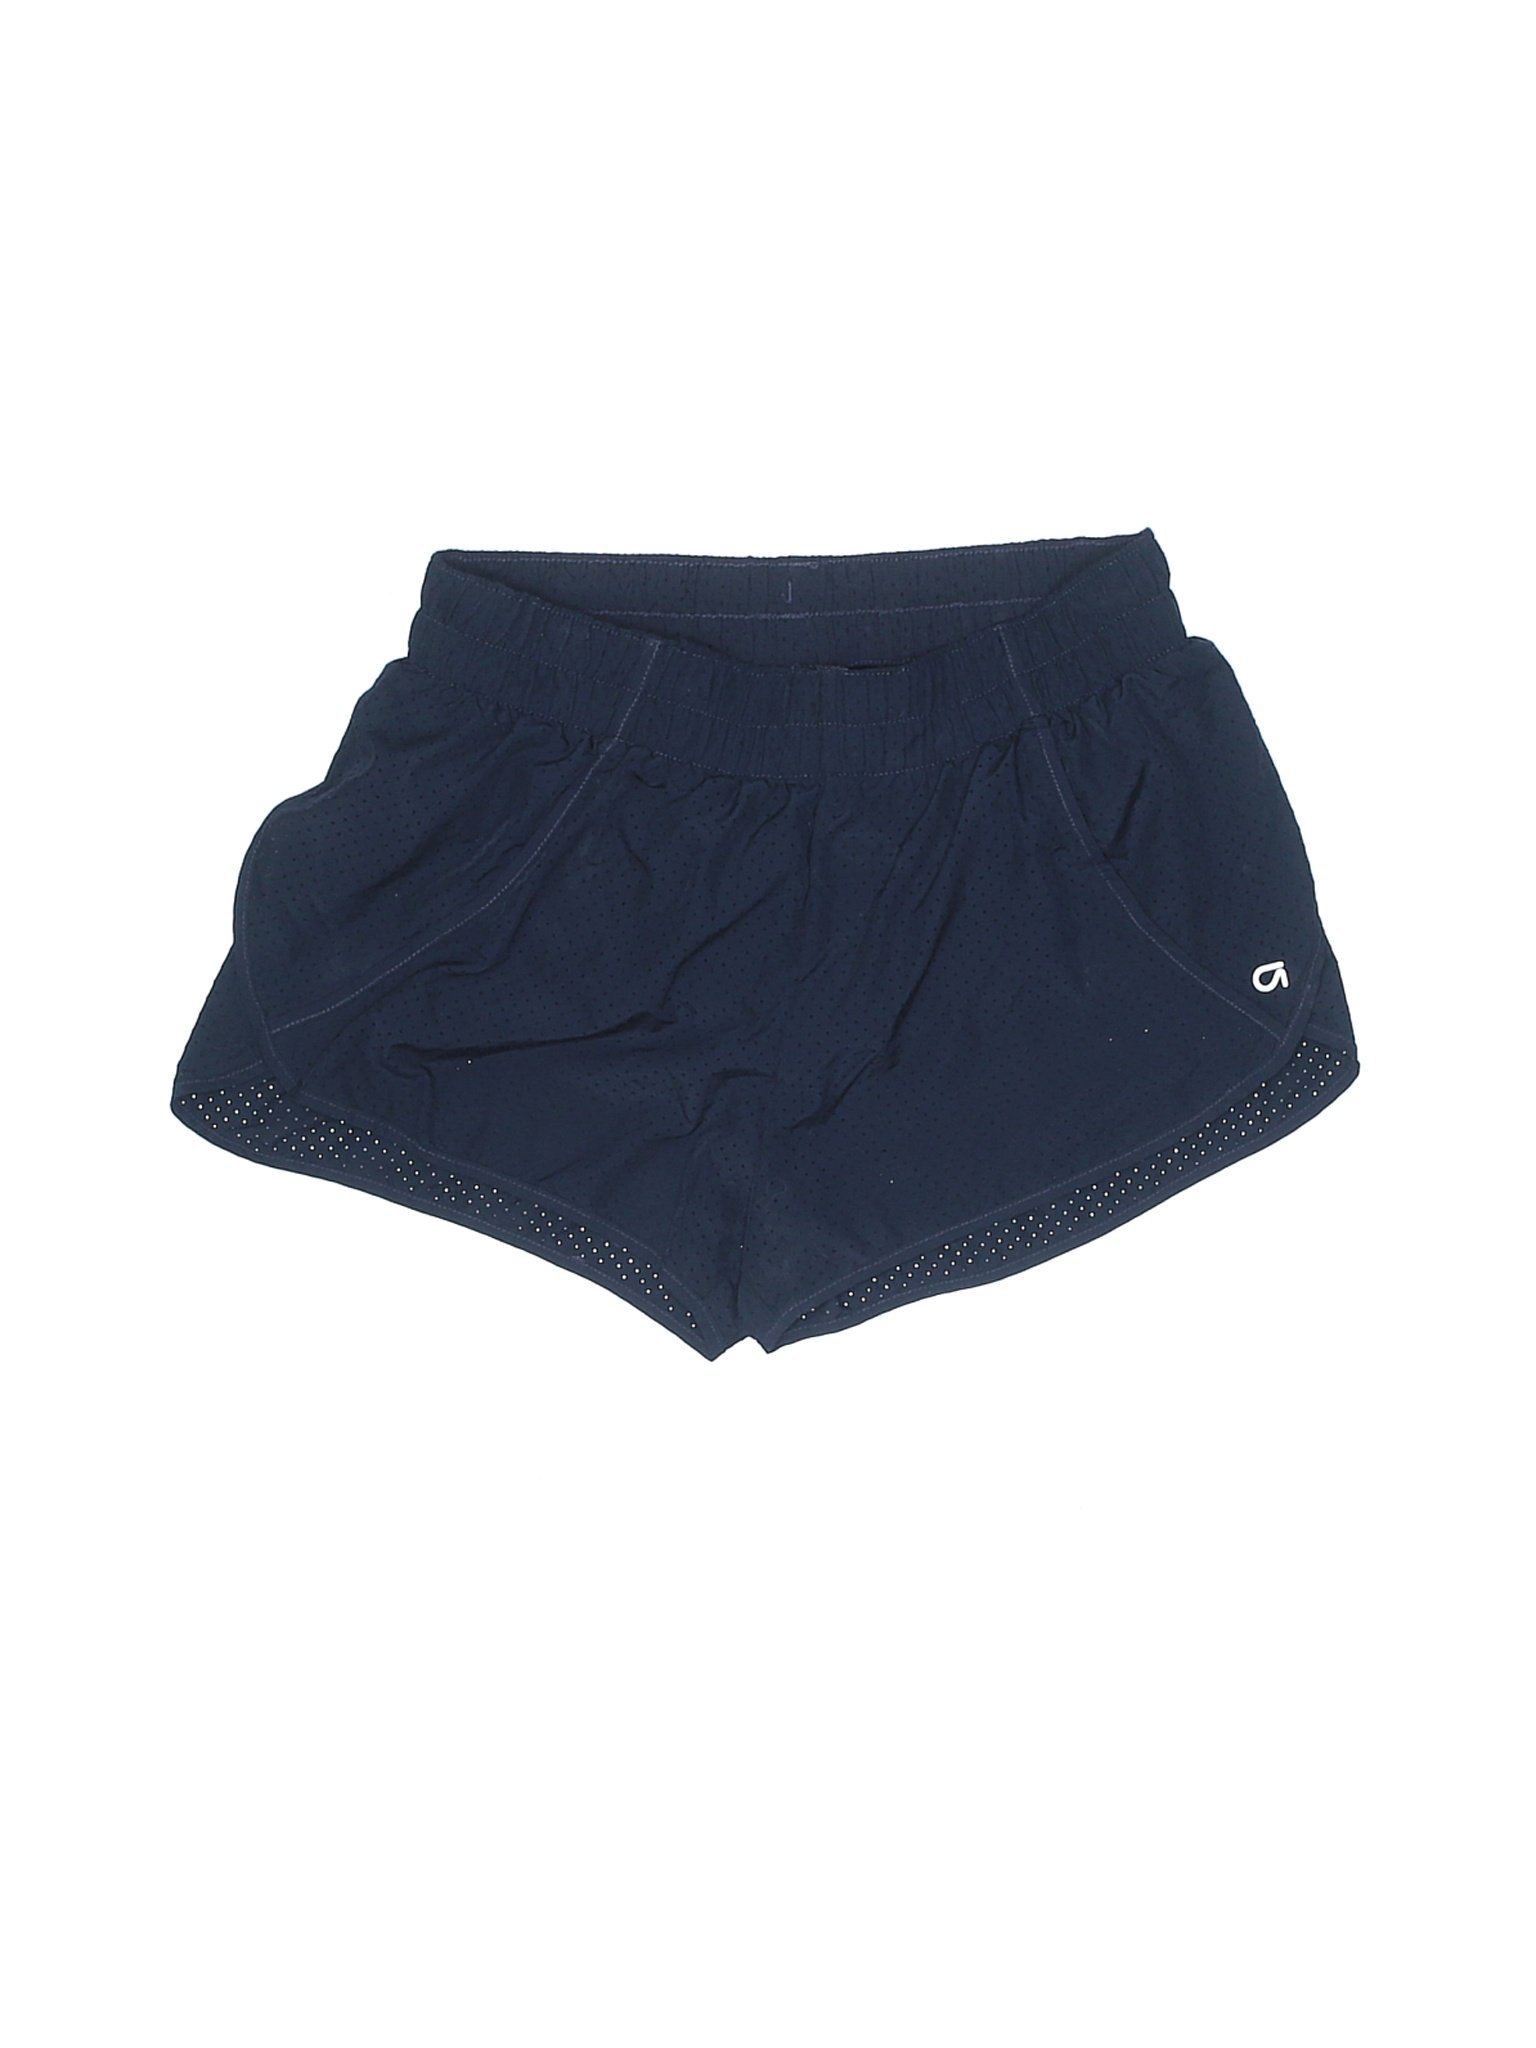 Gap Fit Women Blue Athletic Shorts XS | eBay